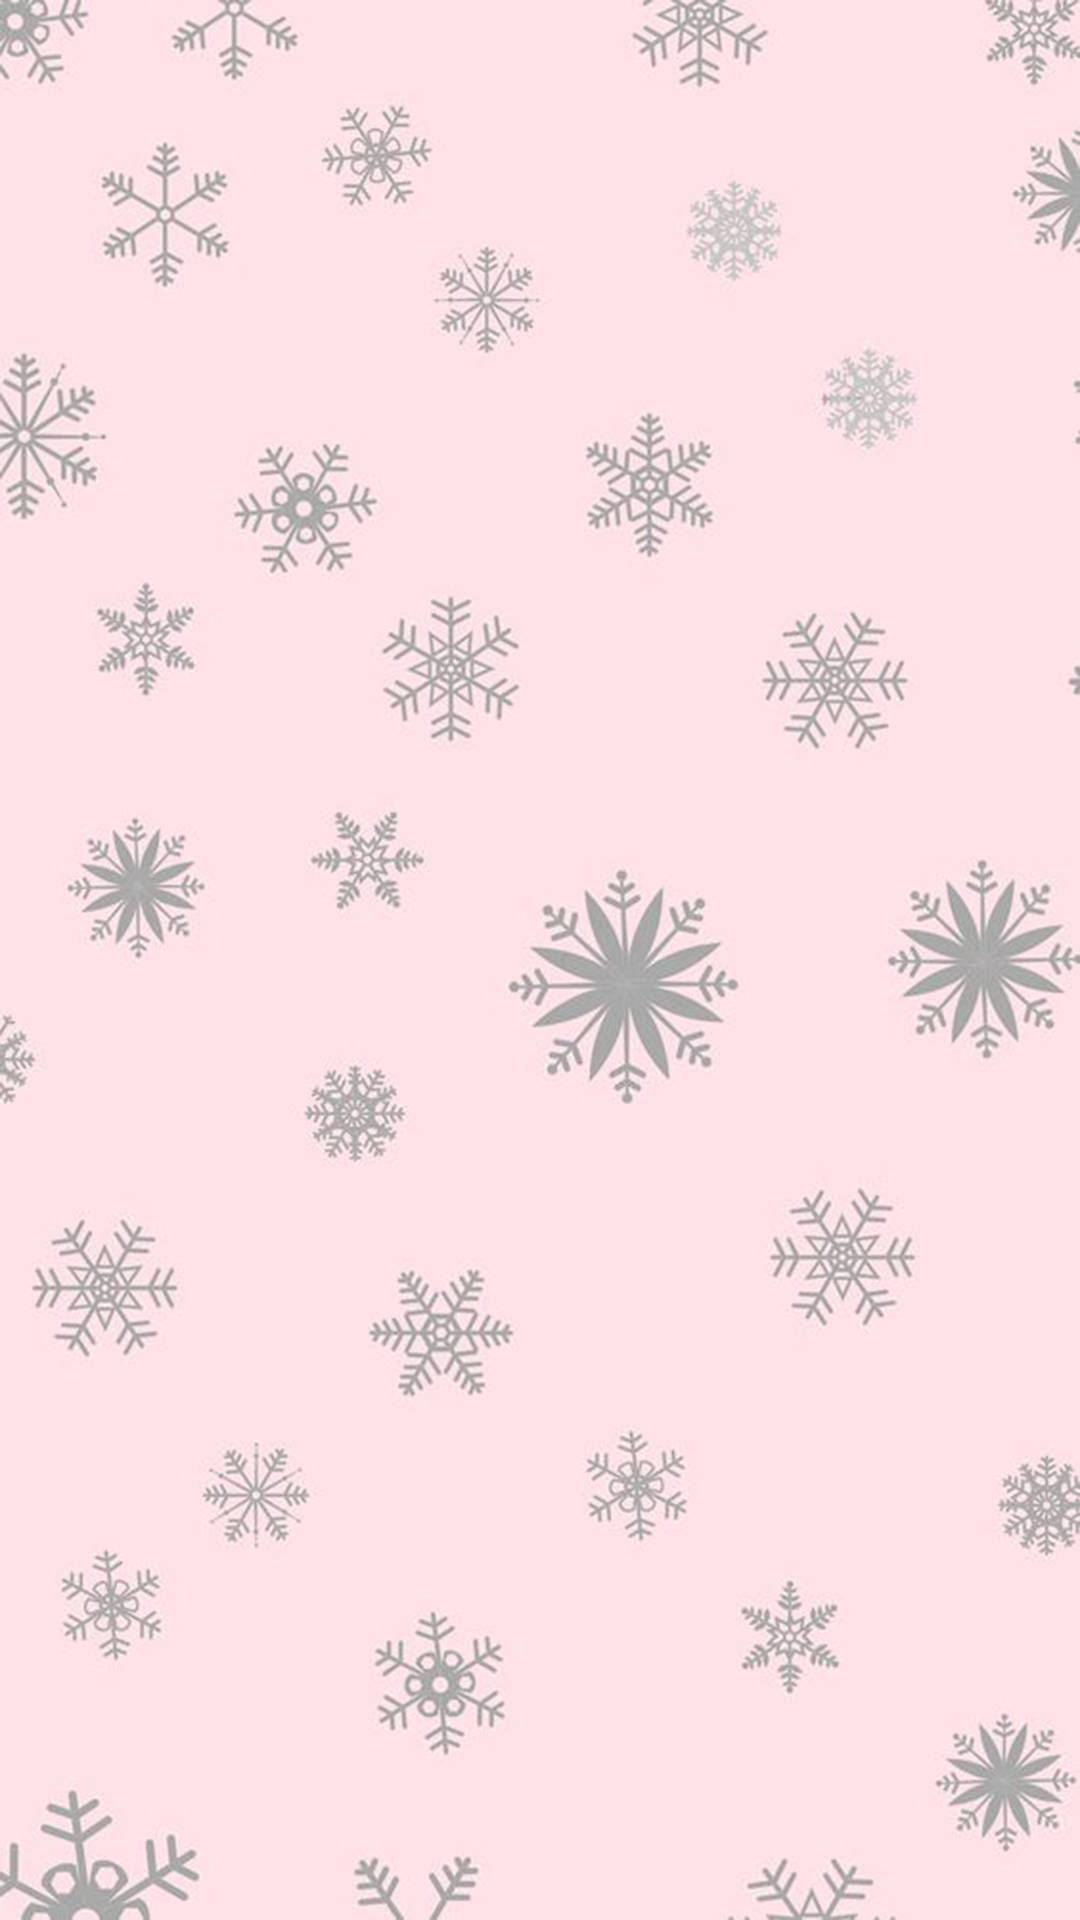 Instagram Story Winter Snowflakes Pattern Wallpaper